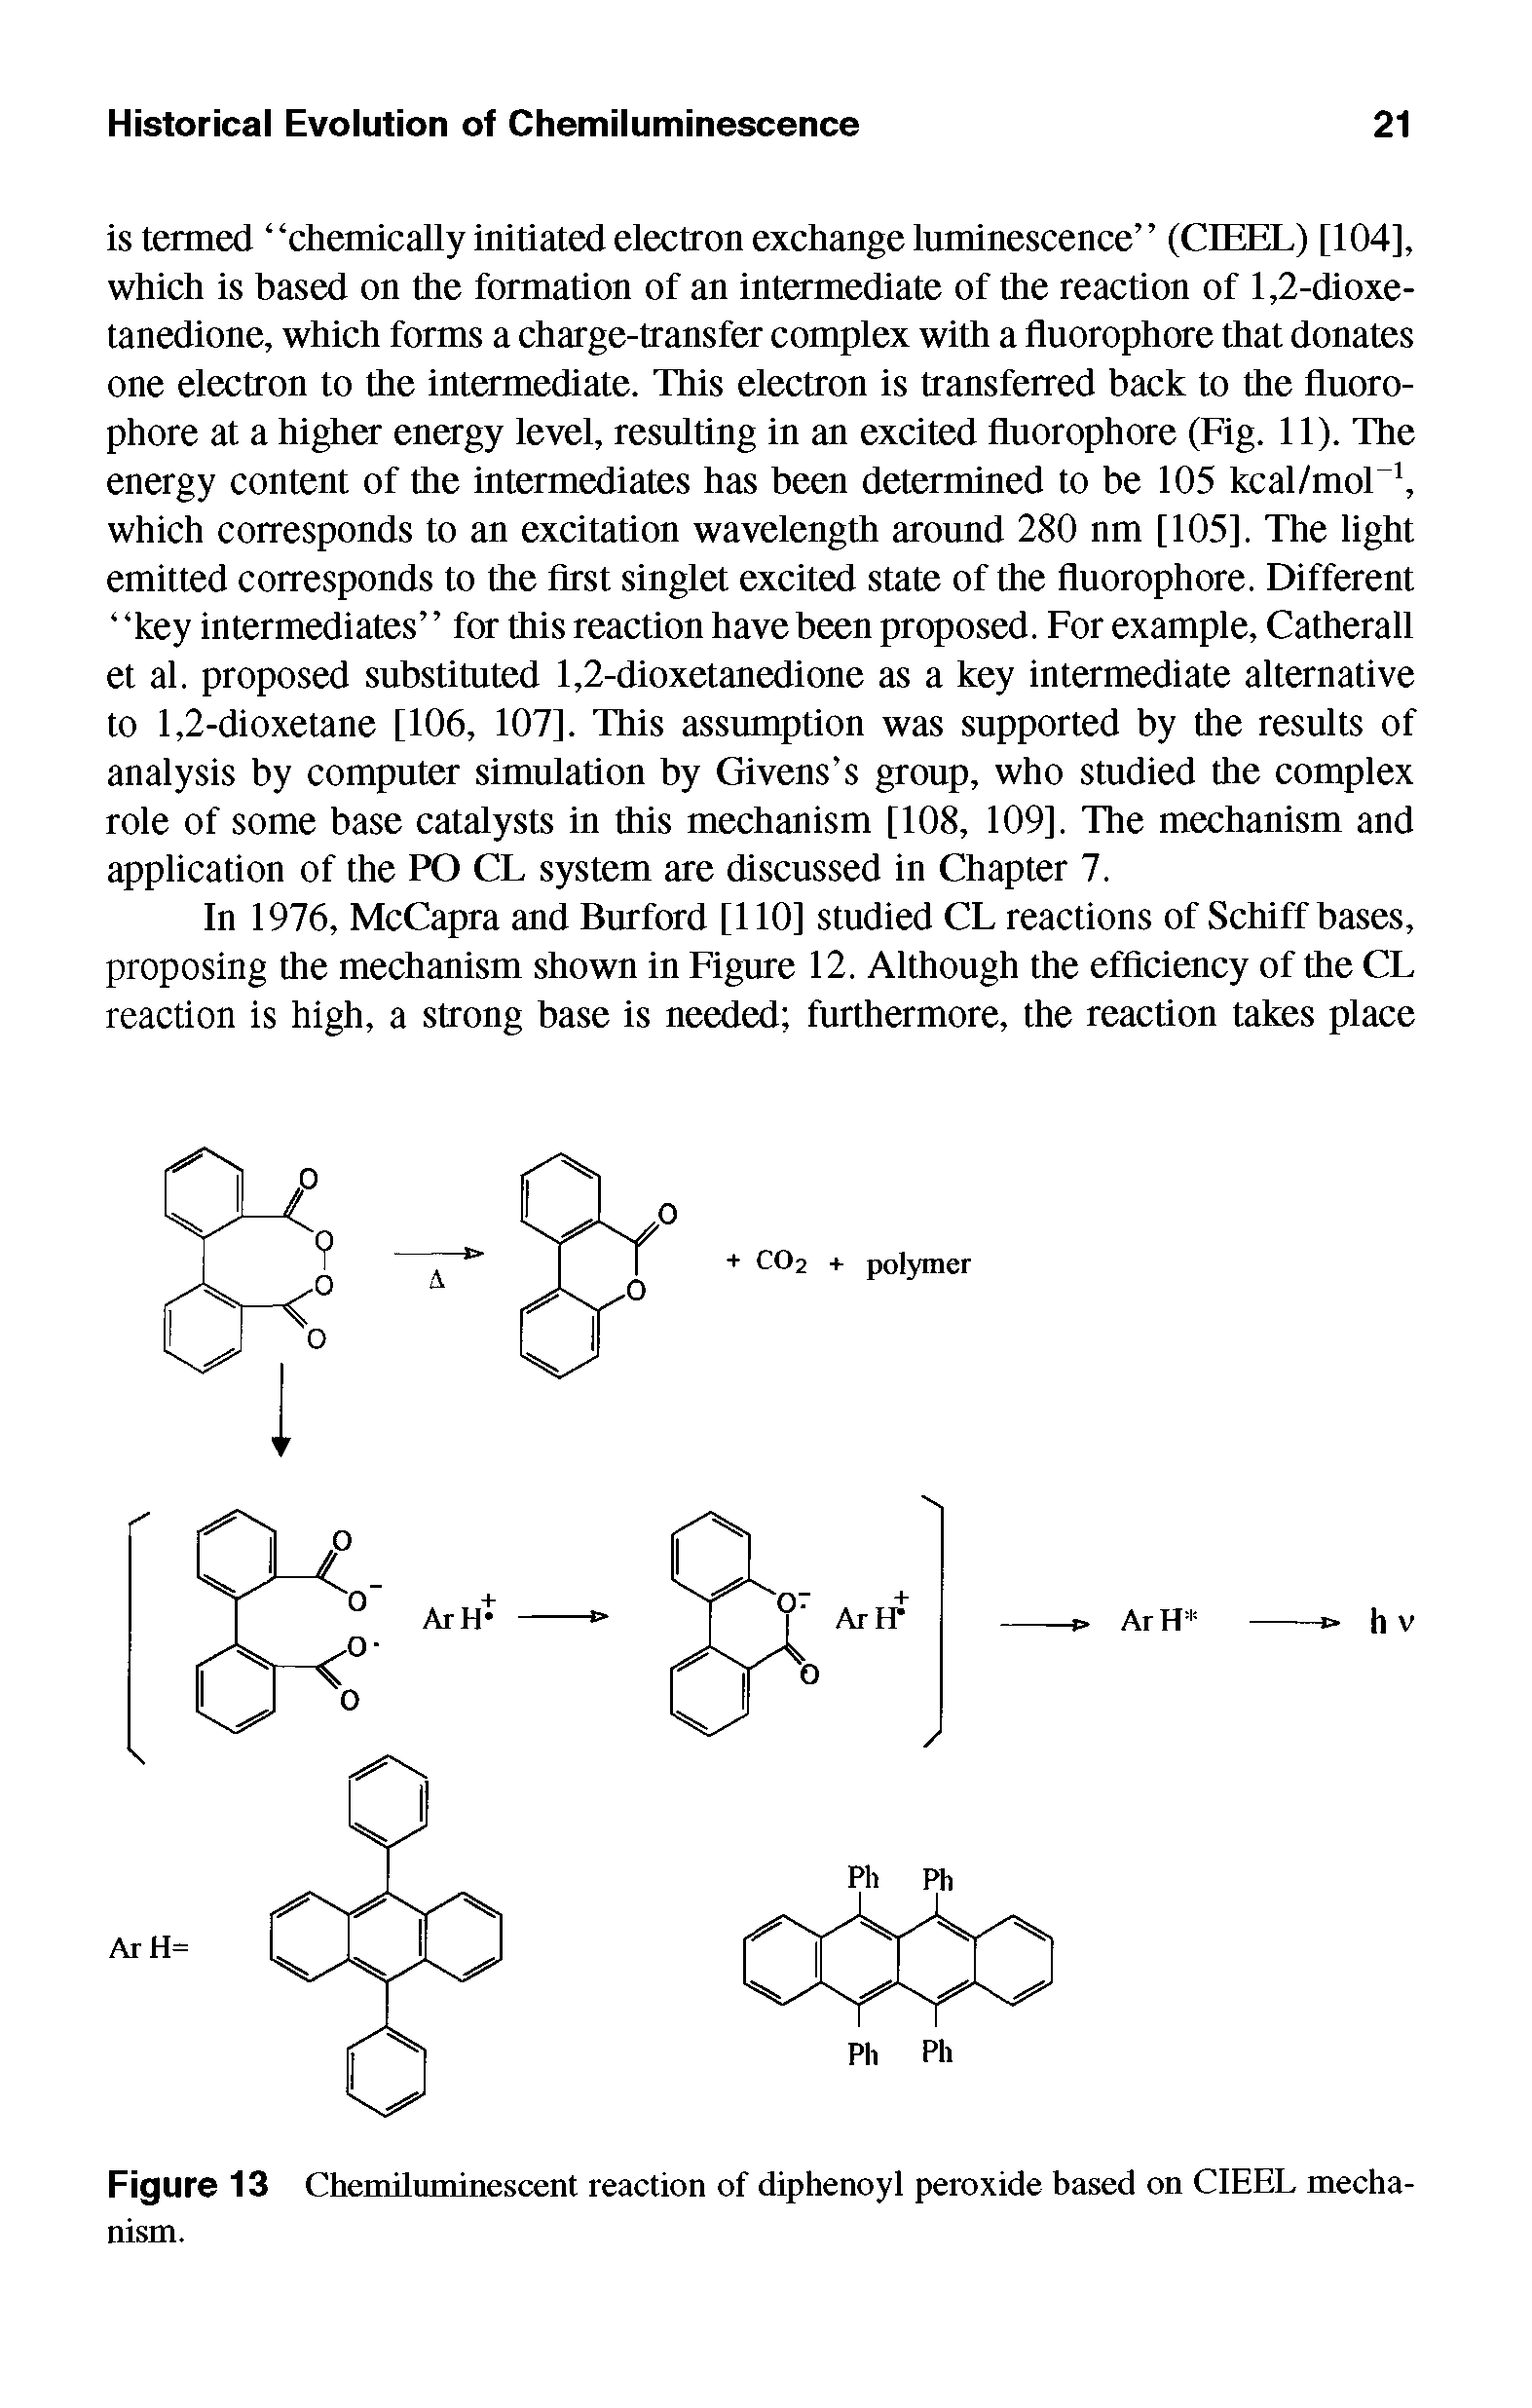 Figure 13 Chemiluminescent reaction of diphenoyl peroxide based on CIEEL mechanism.